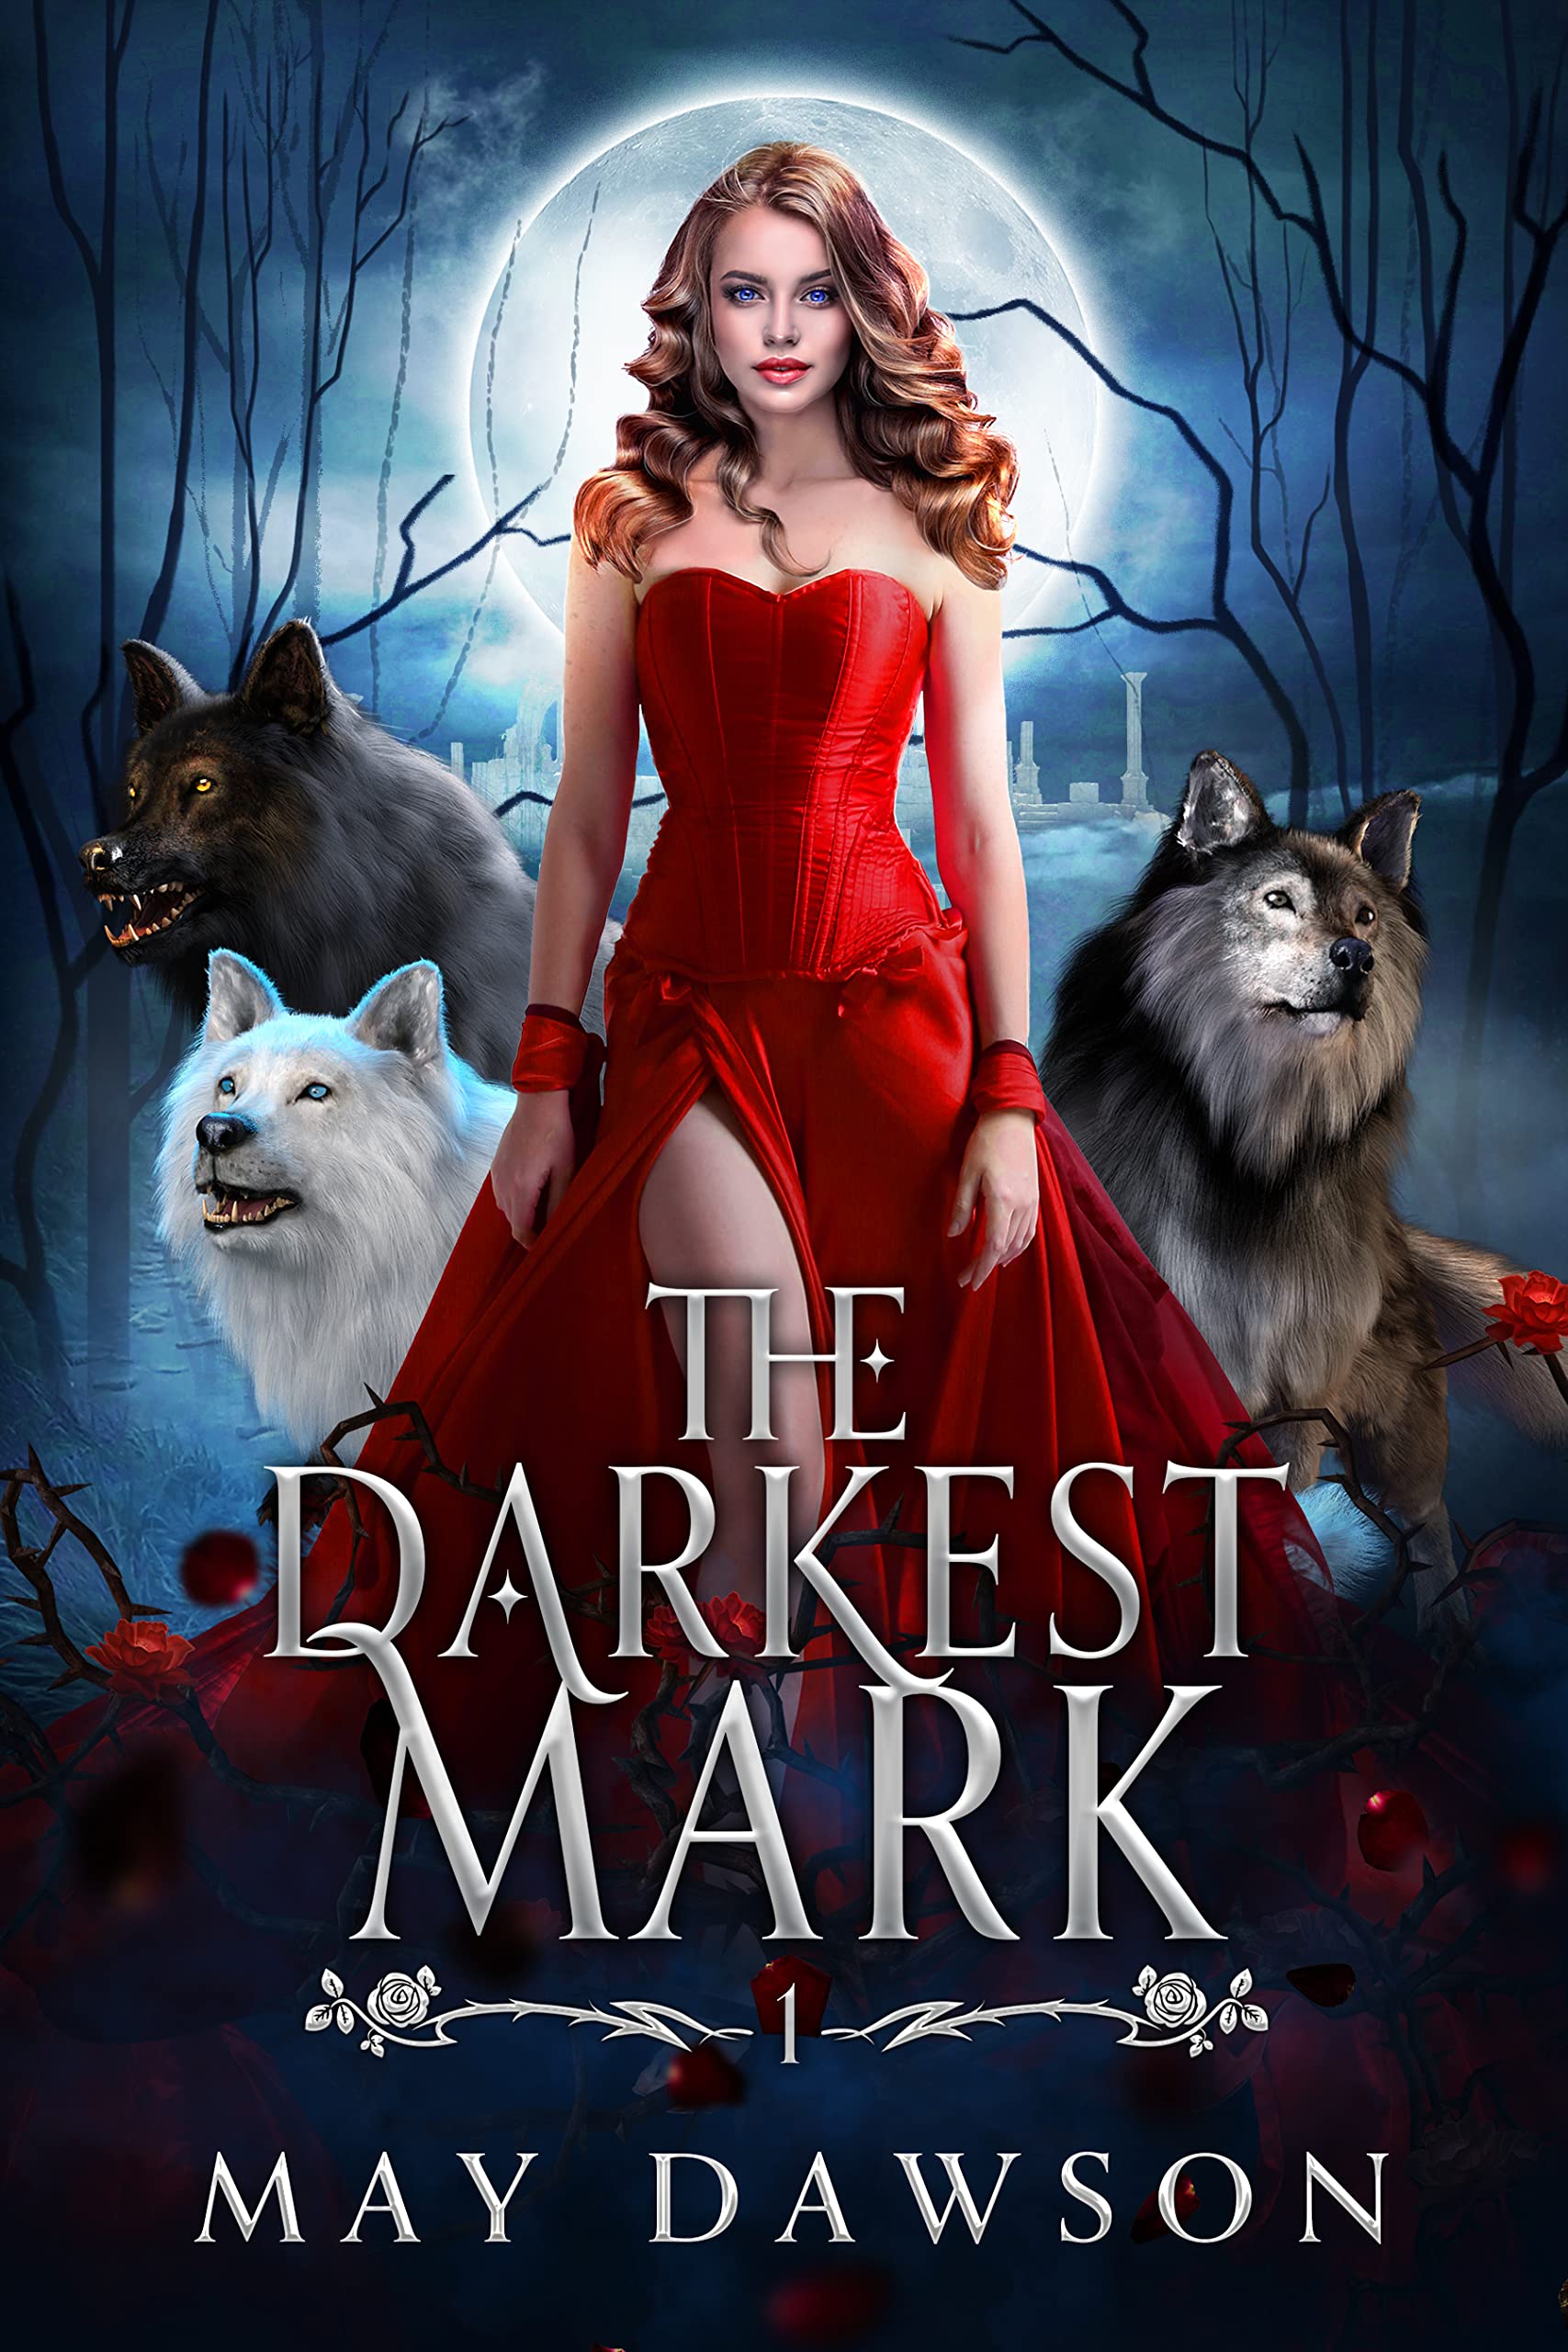 The Darkest Mark by May Dawson PDF Download